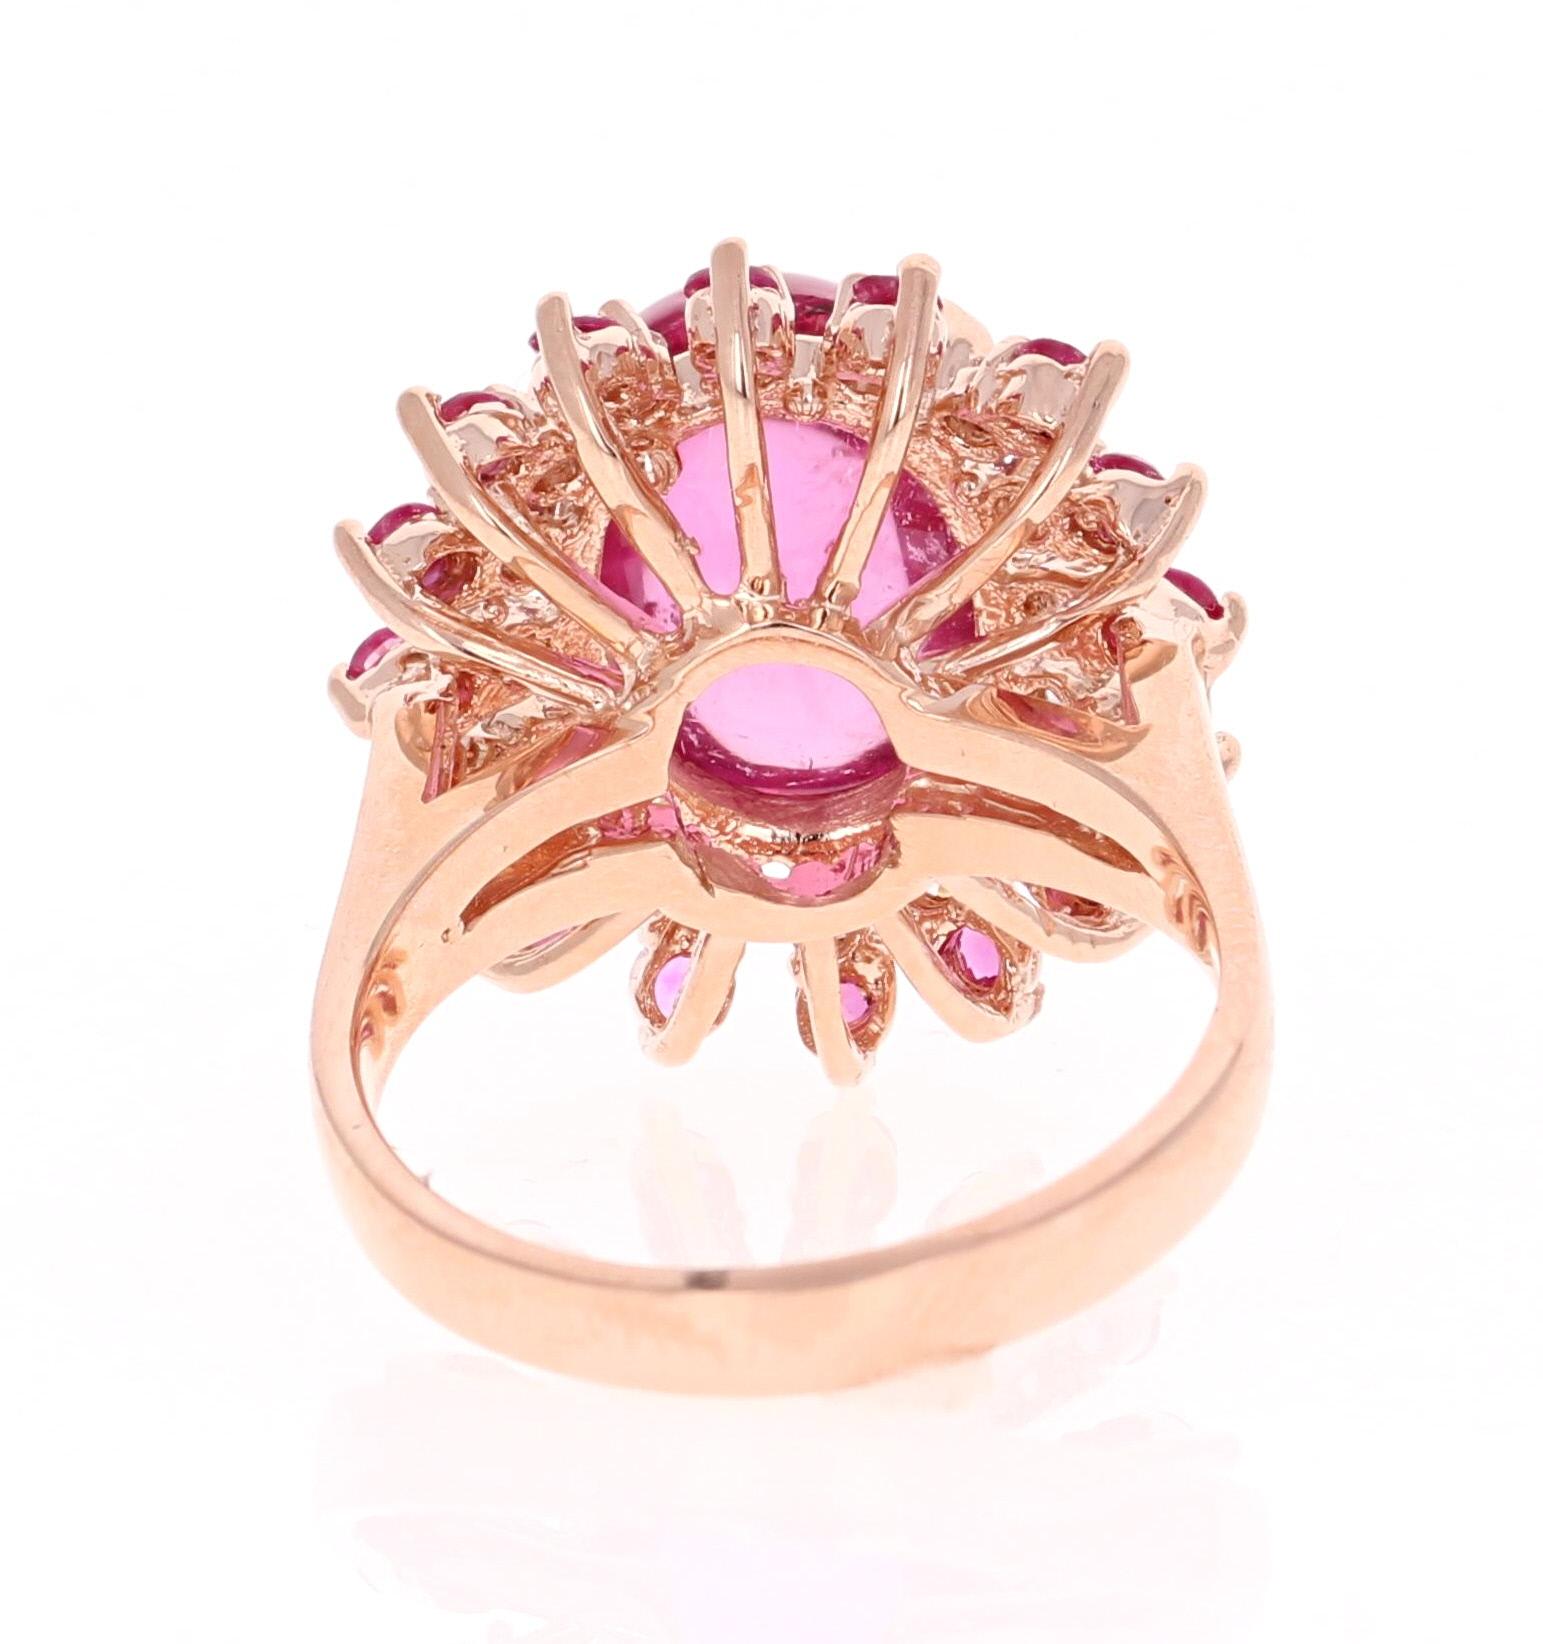 Oval Cut 6.86 Carat Pink Sapphire Tourmaline Diamond Rose Gold Cocktail Ring